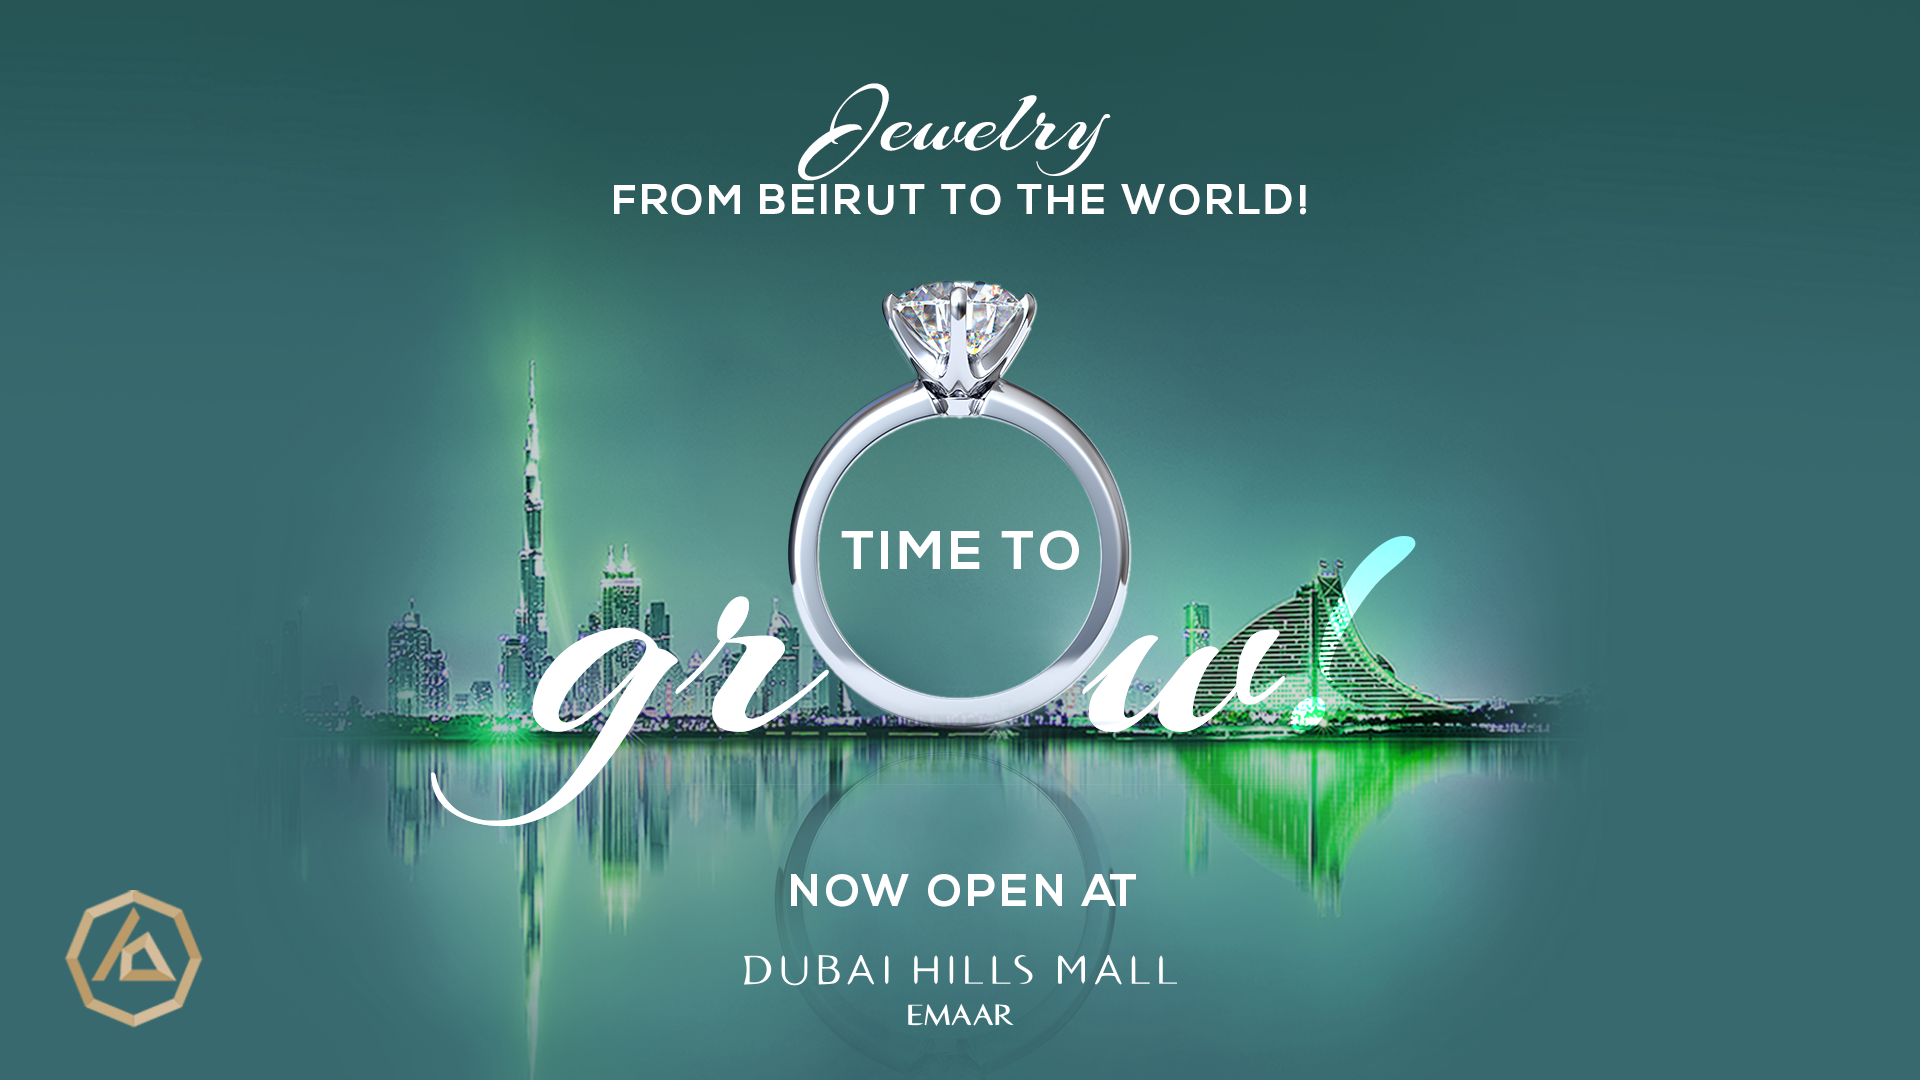 Now open in Dubai Hills Mall